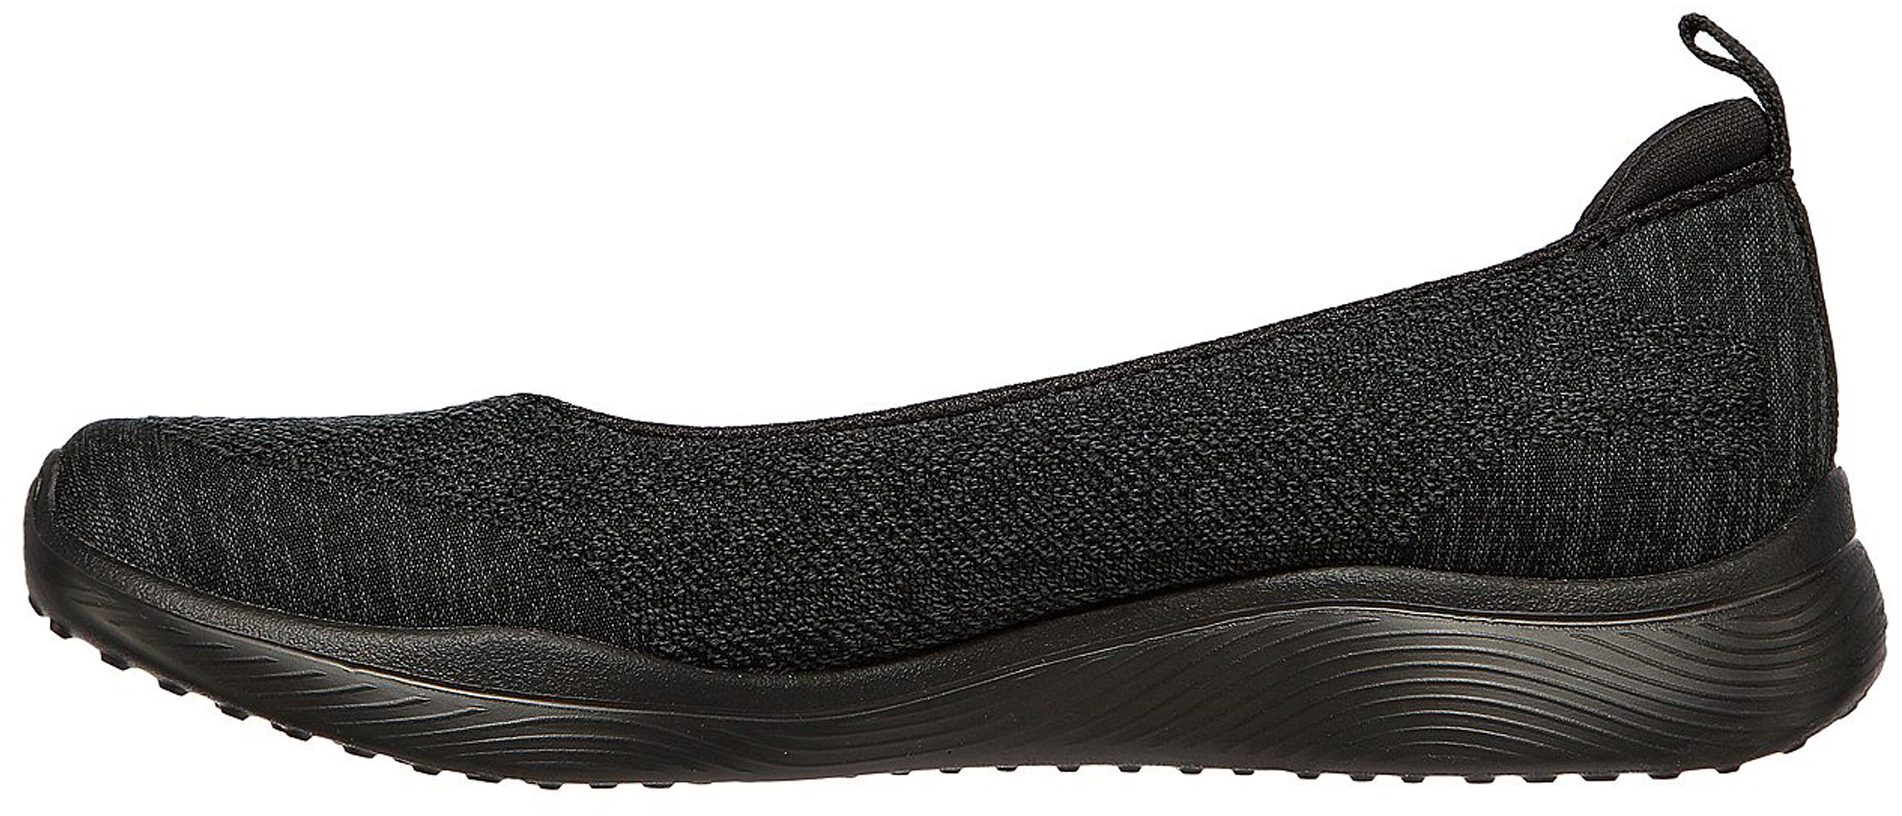 Skechers Microburst 2.0 - Nice Form Black 104260 BBK - Everyday Shoes ...